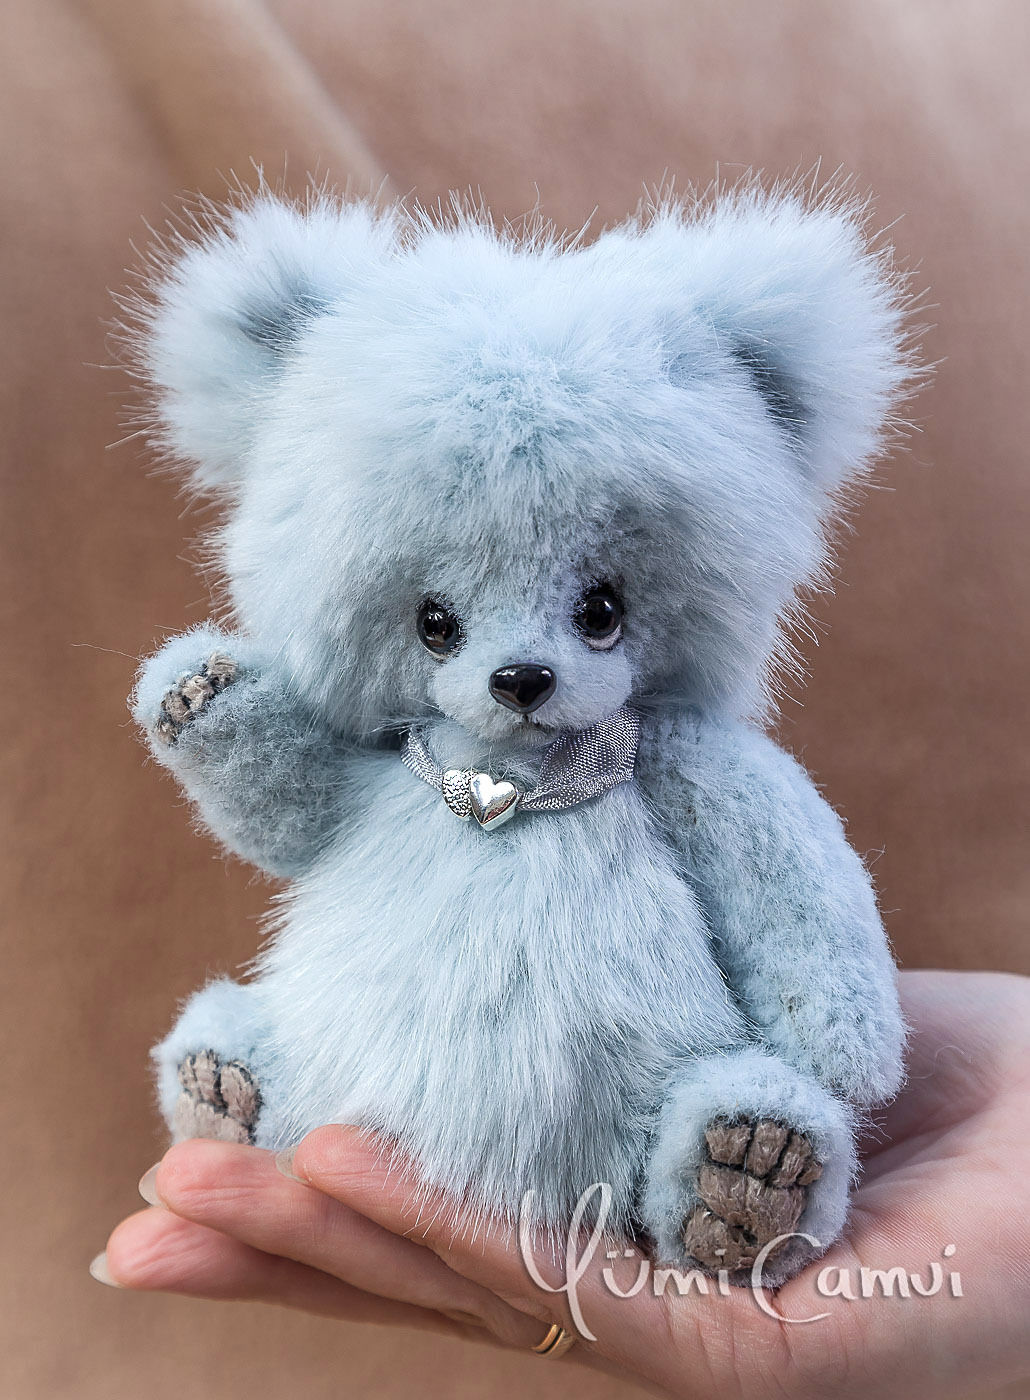 Cute kawaii jointed one of a kind Teddy Bear artist handmade OOAK by Yumi Camui